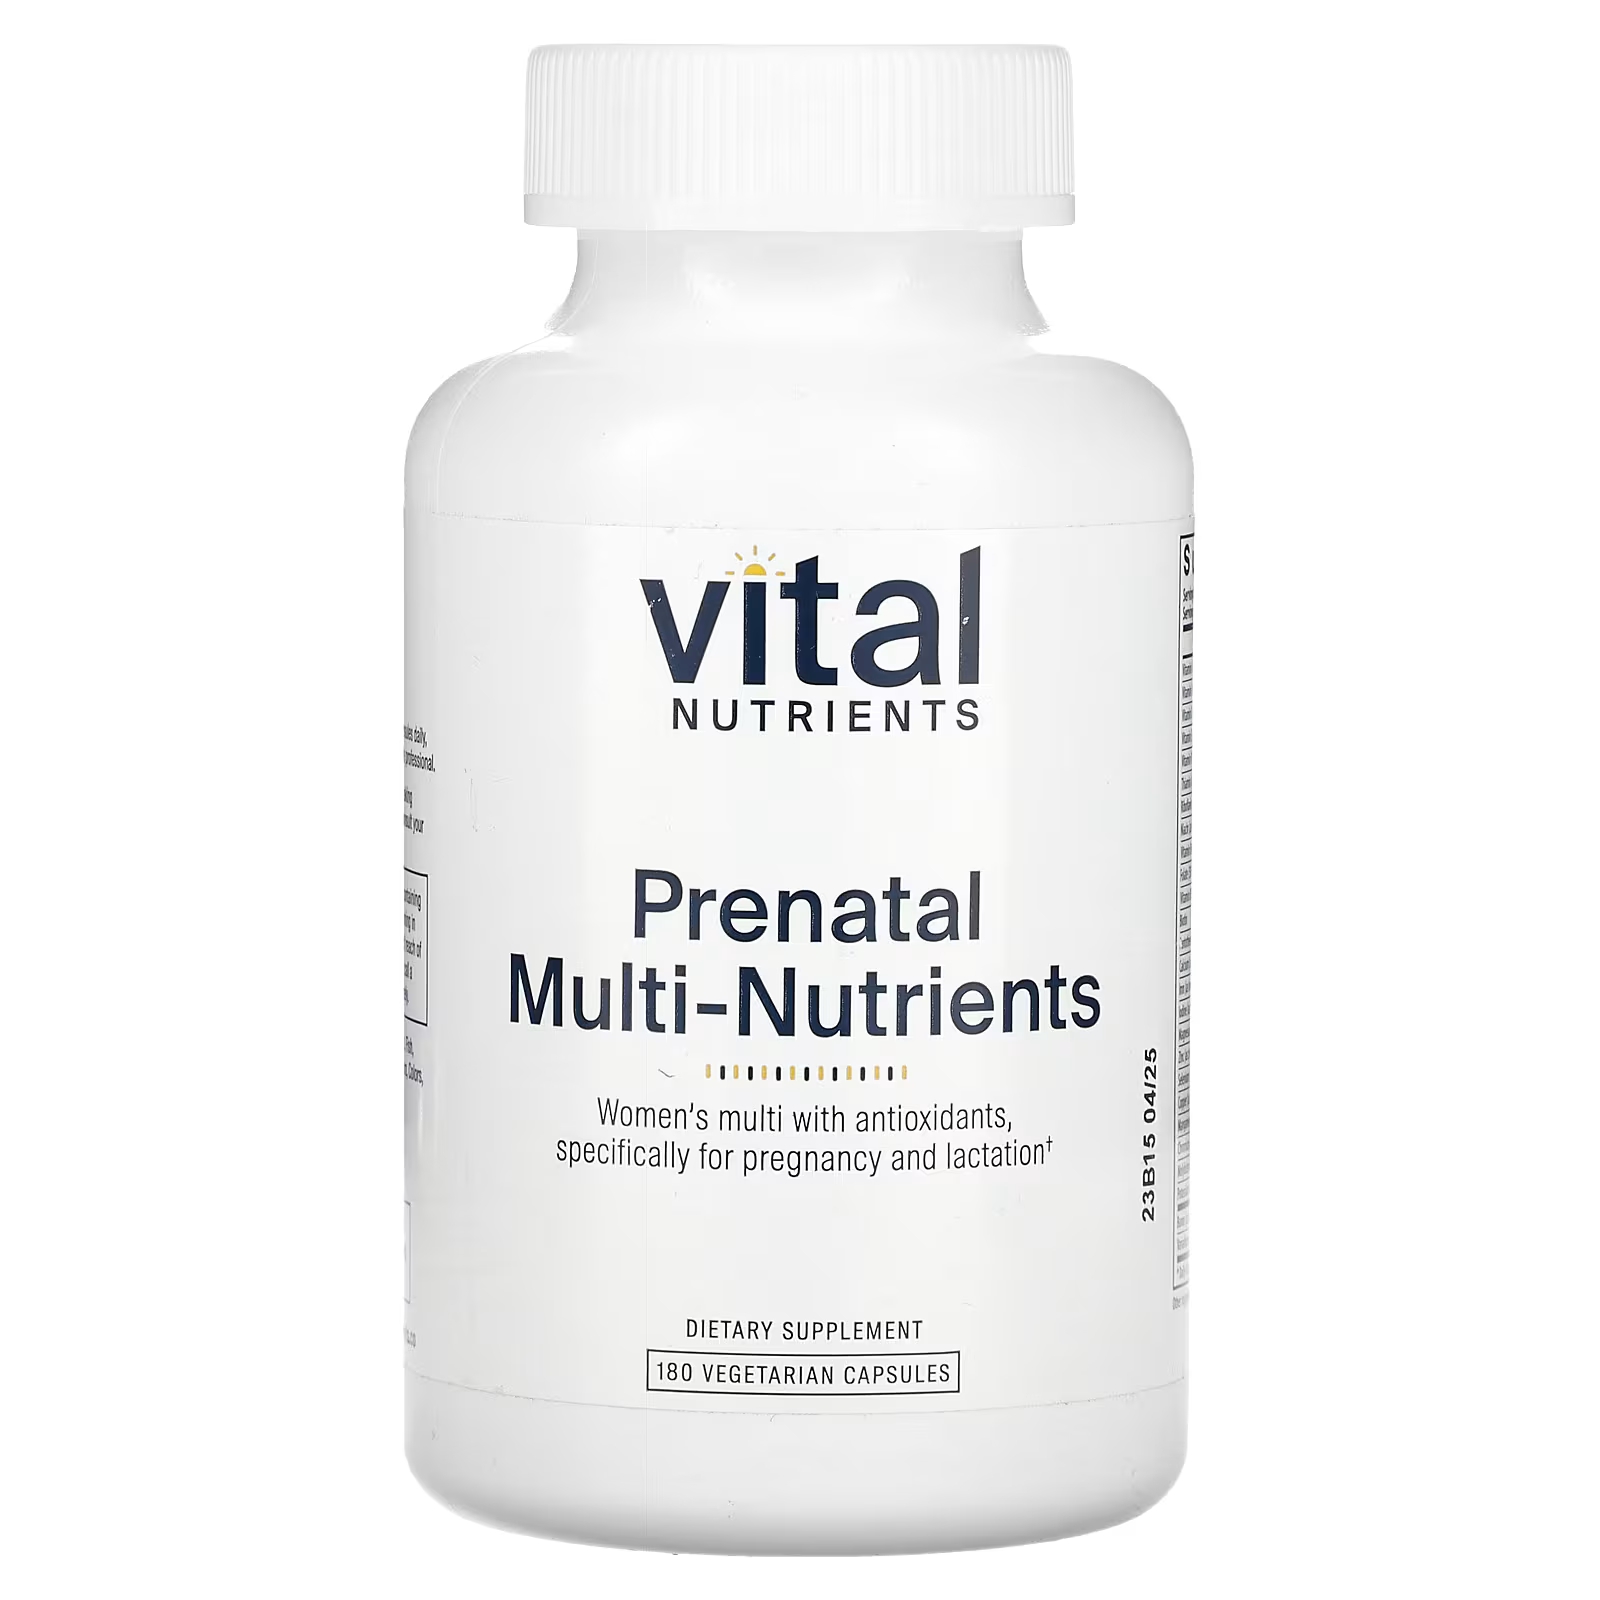 Пищевая добавка Vital Nutrients Prenatal Multi-Nutrients, 180 капсул витамины антиоксиданты минералы nutraway зма в таблетках